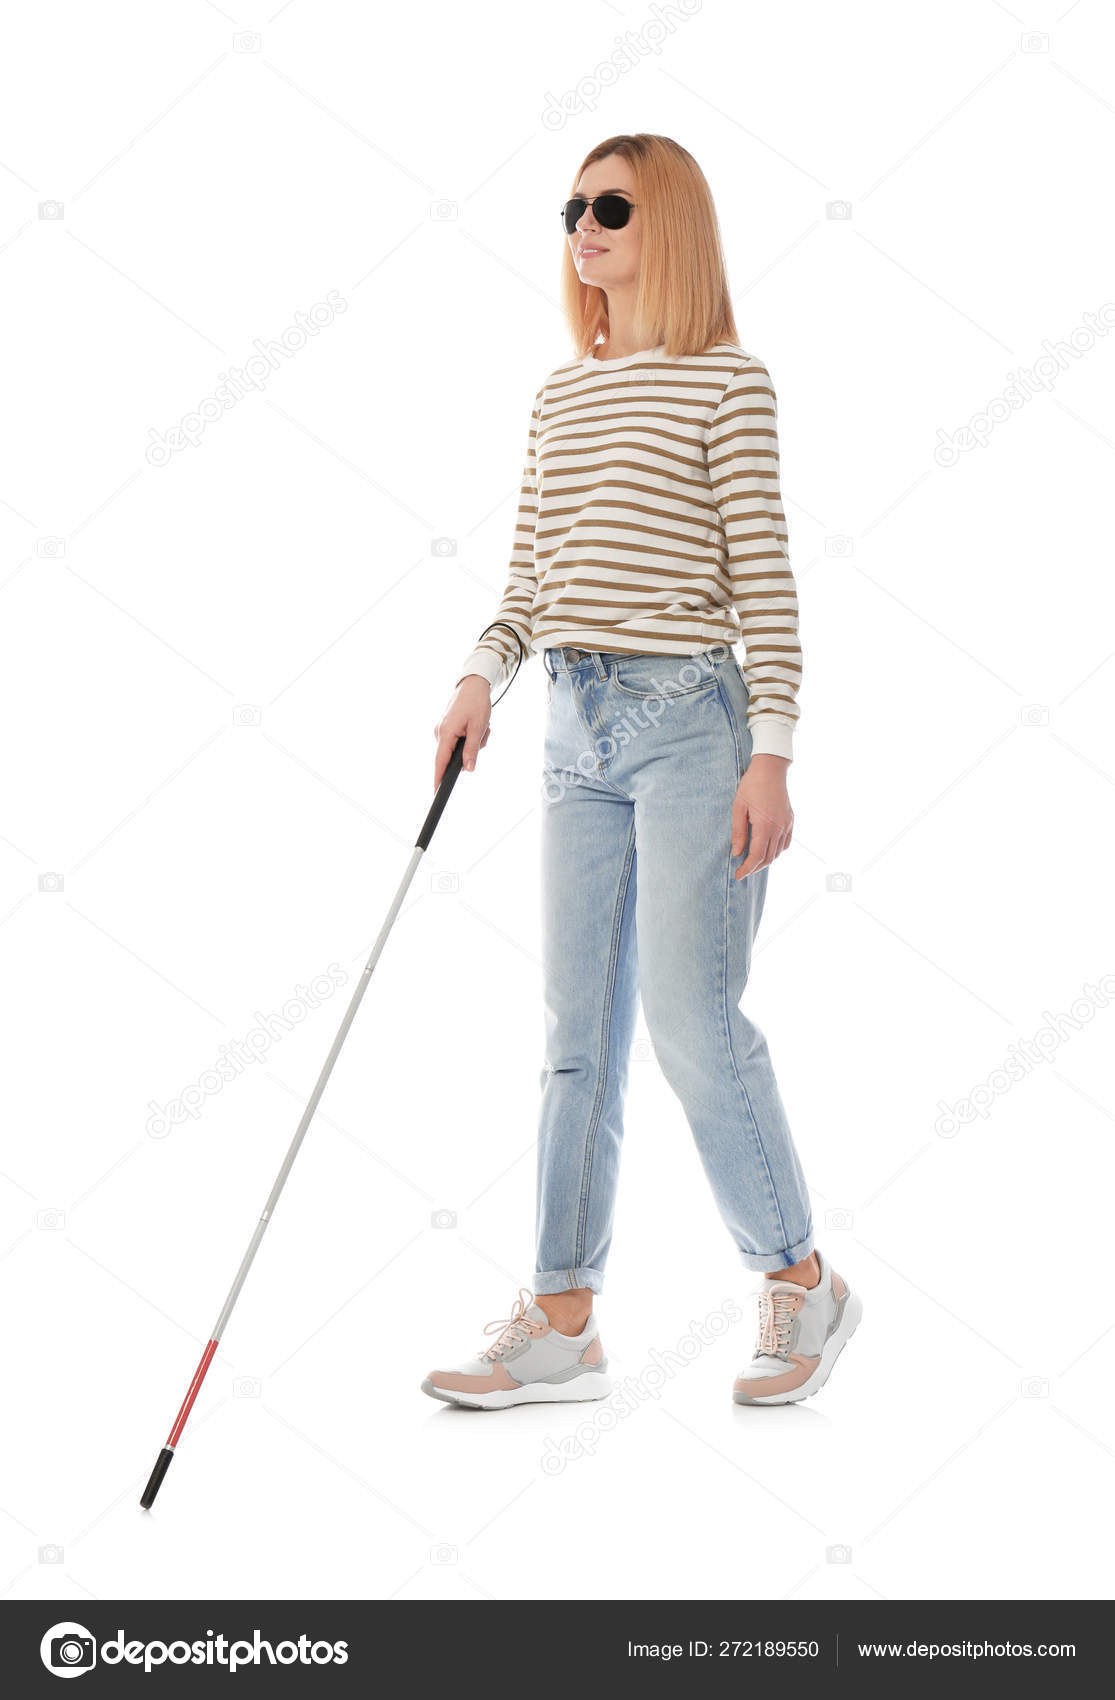 https://st4.depositphotos.com/16122460/27218/i/1600/depositphotos_272189550-stock-photo-blind-person-with-long-cane.jpg